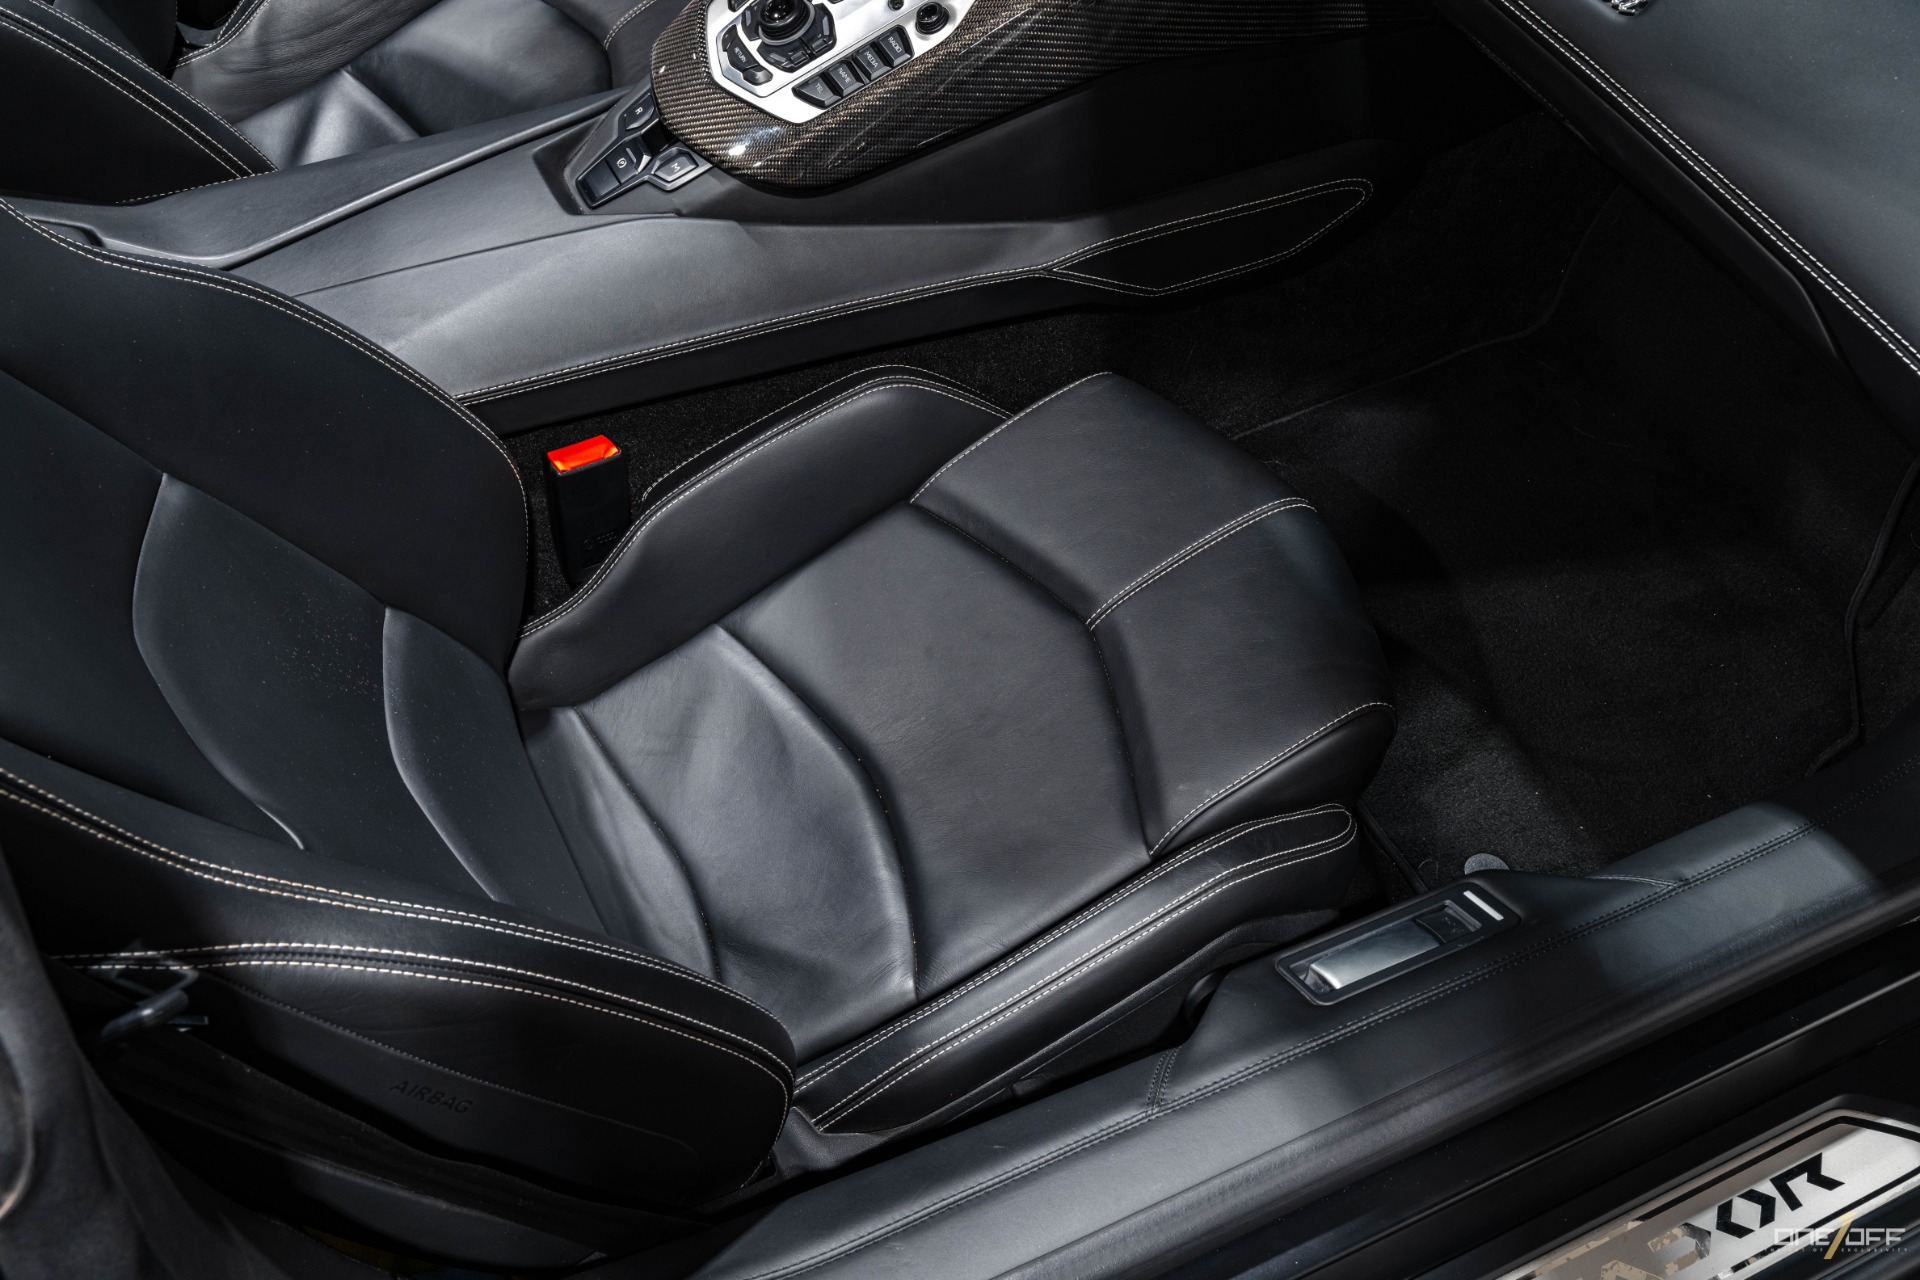 Lamborghini Aventador (carbon) - pre-order office chair from a car seat